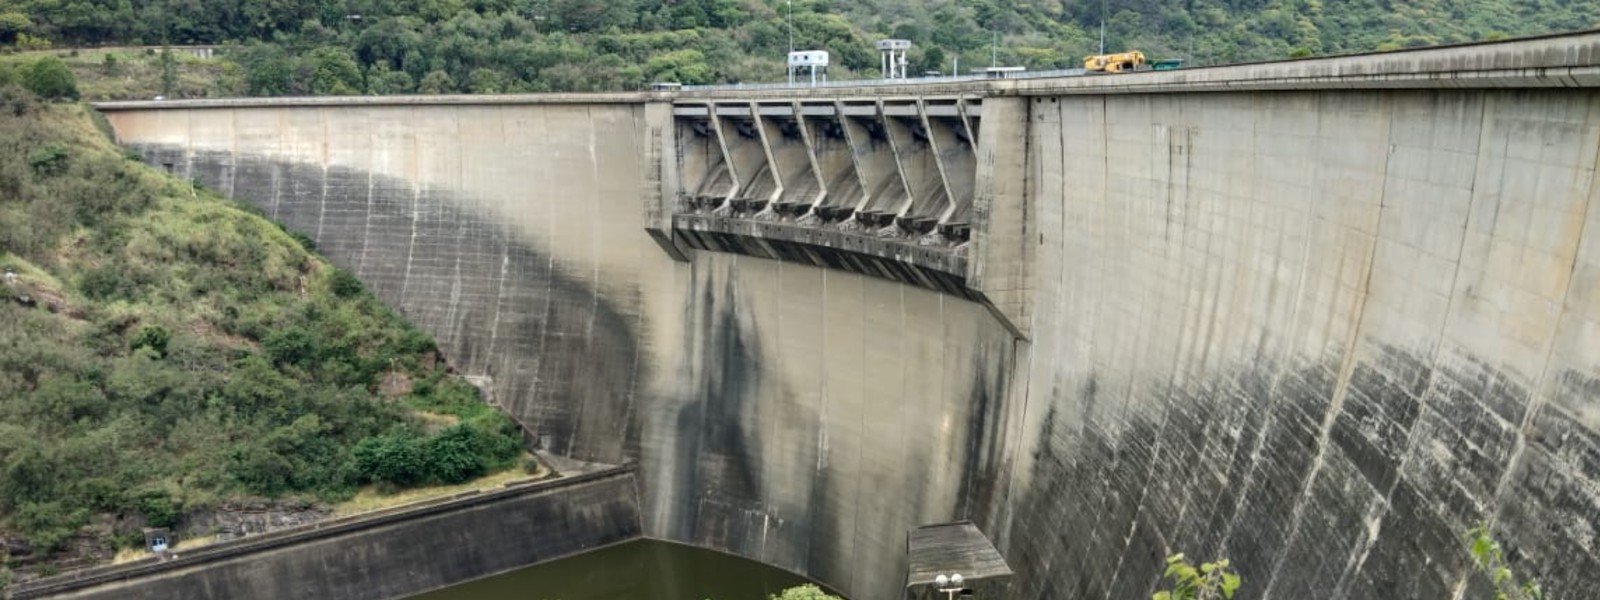 Several reservoirs reach maximum capacity